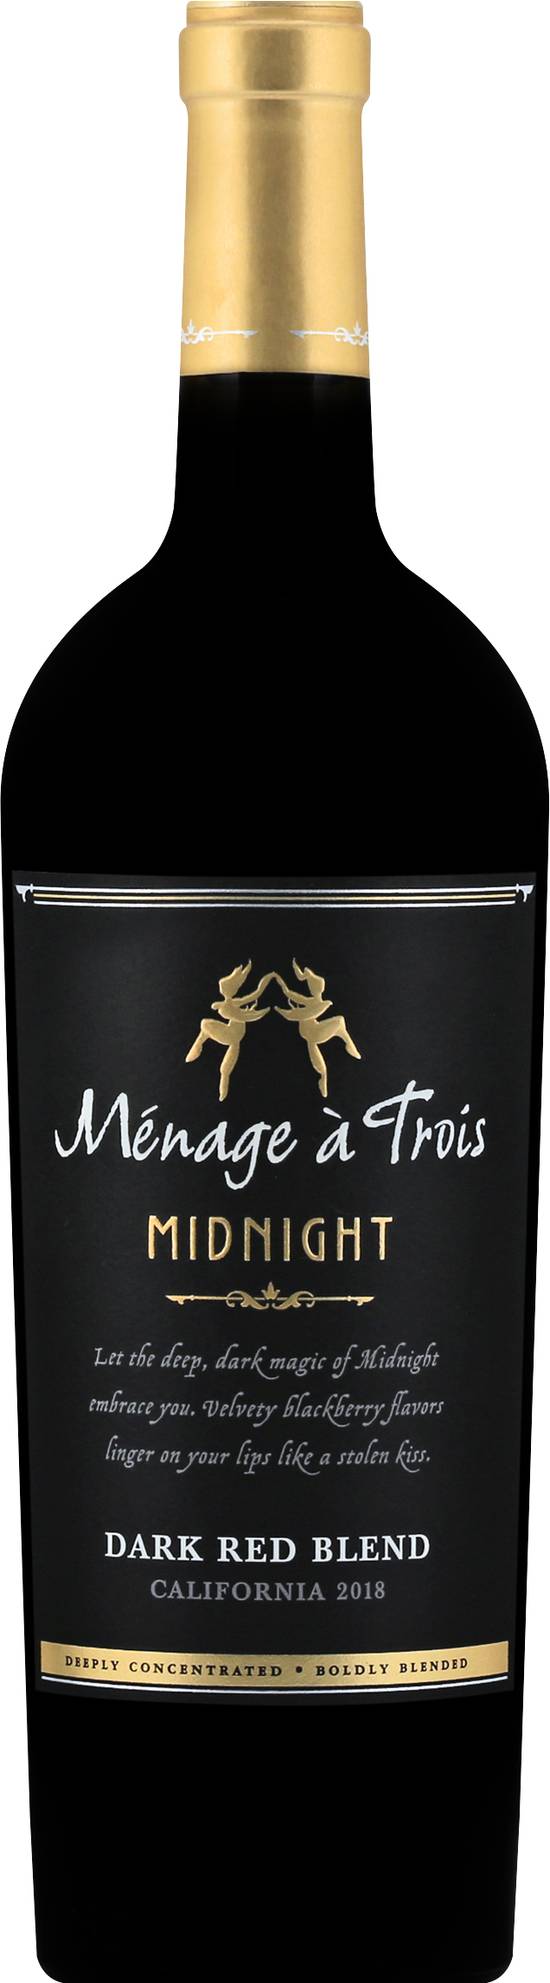 Ménage À Trois California Midnight Dark Red Blend Wine 2018 (750 ml)